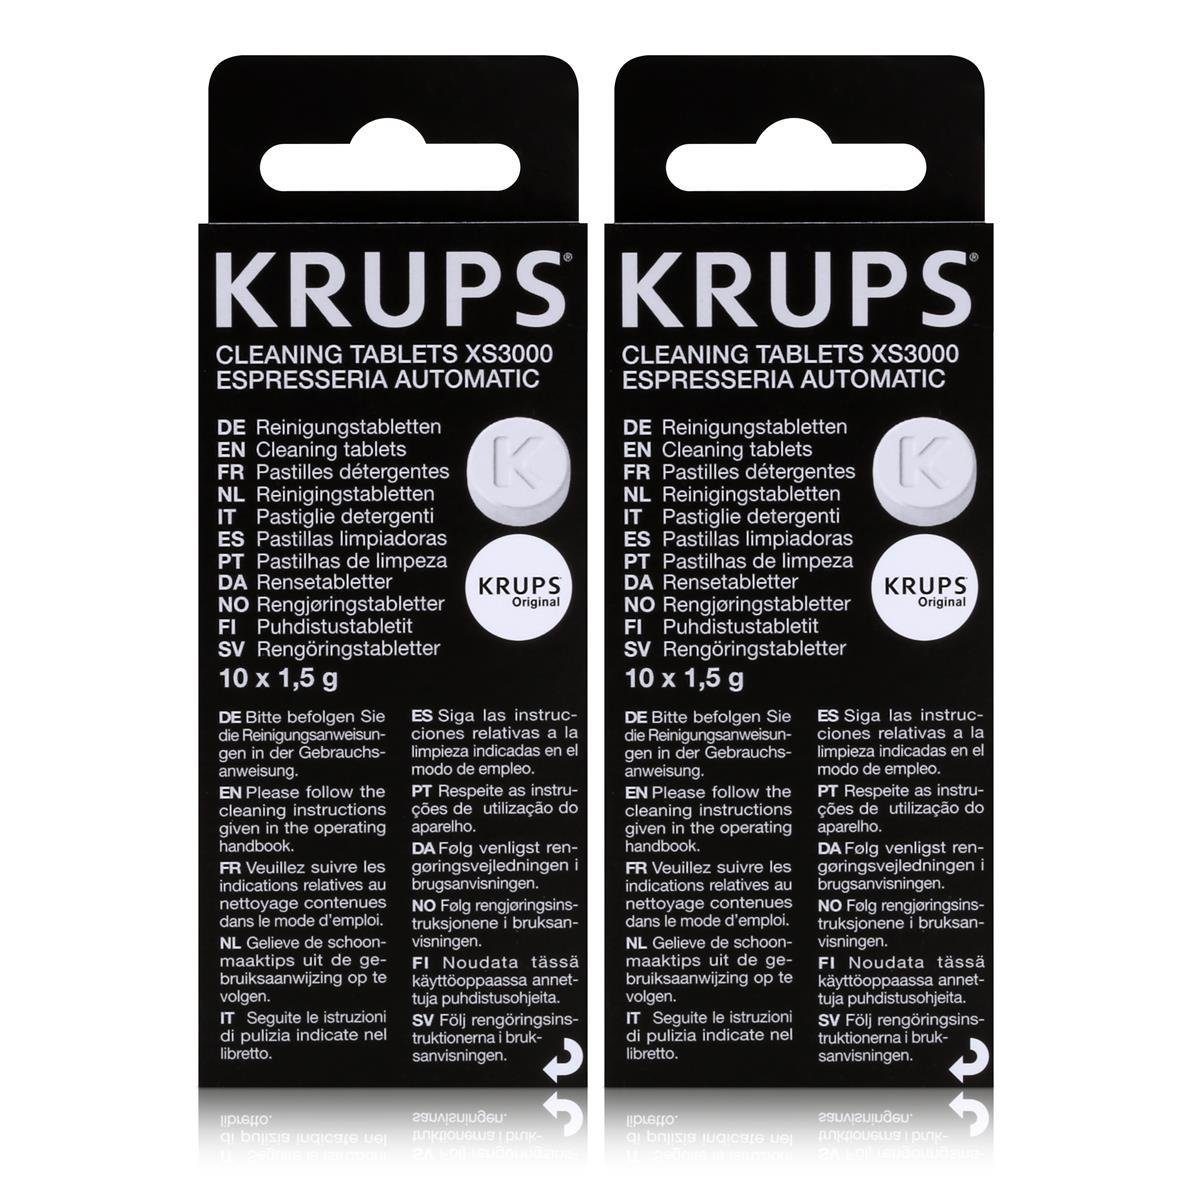 Krups 2x Krups Reinigungstabletten Stück) Reinigungstabletten XS 3000 (10